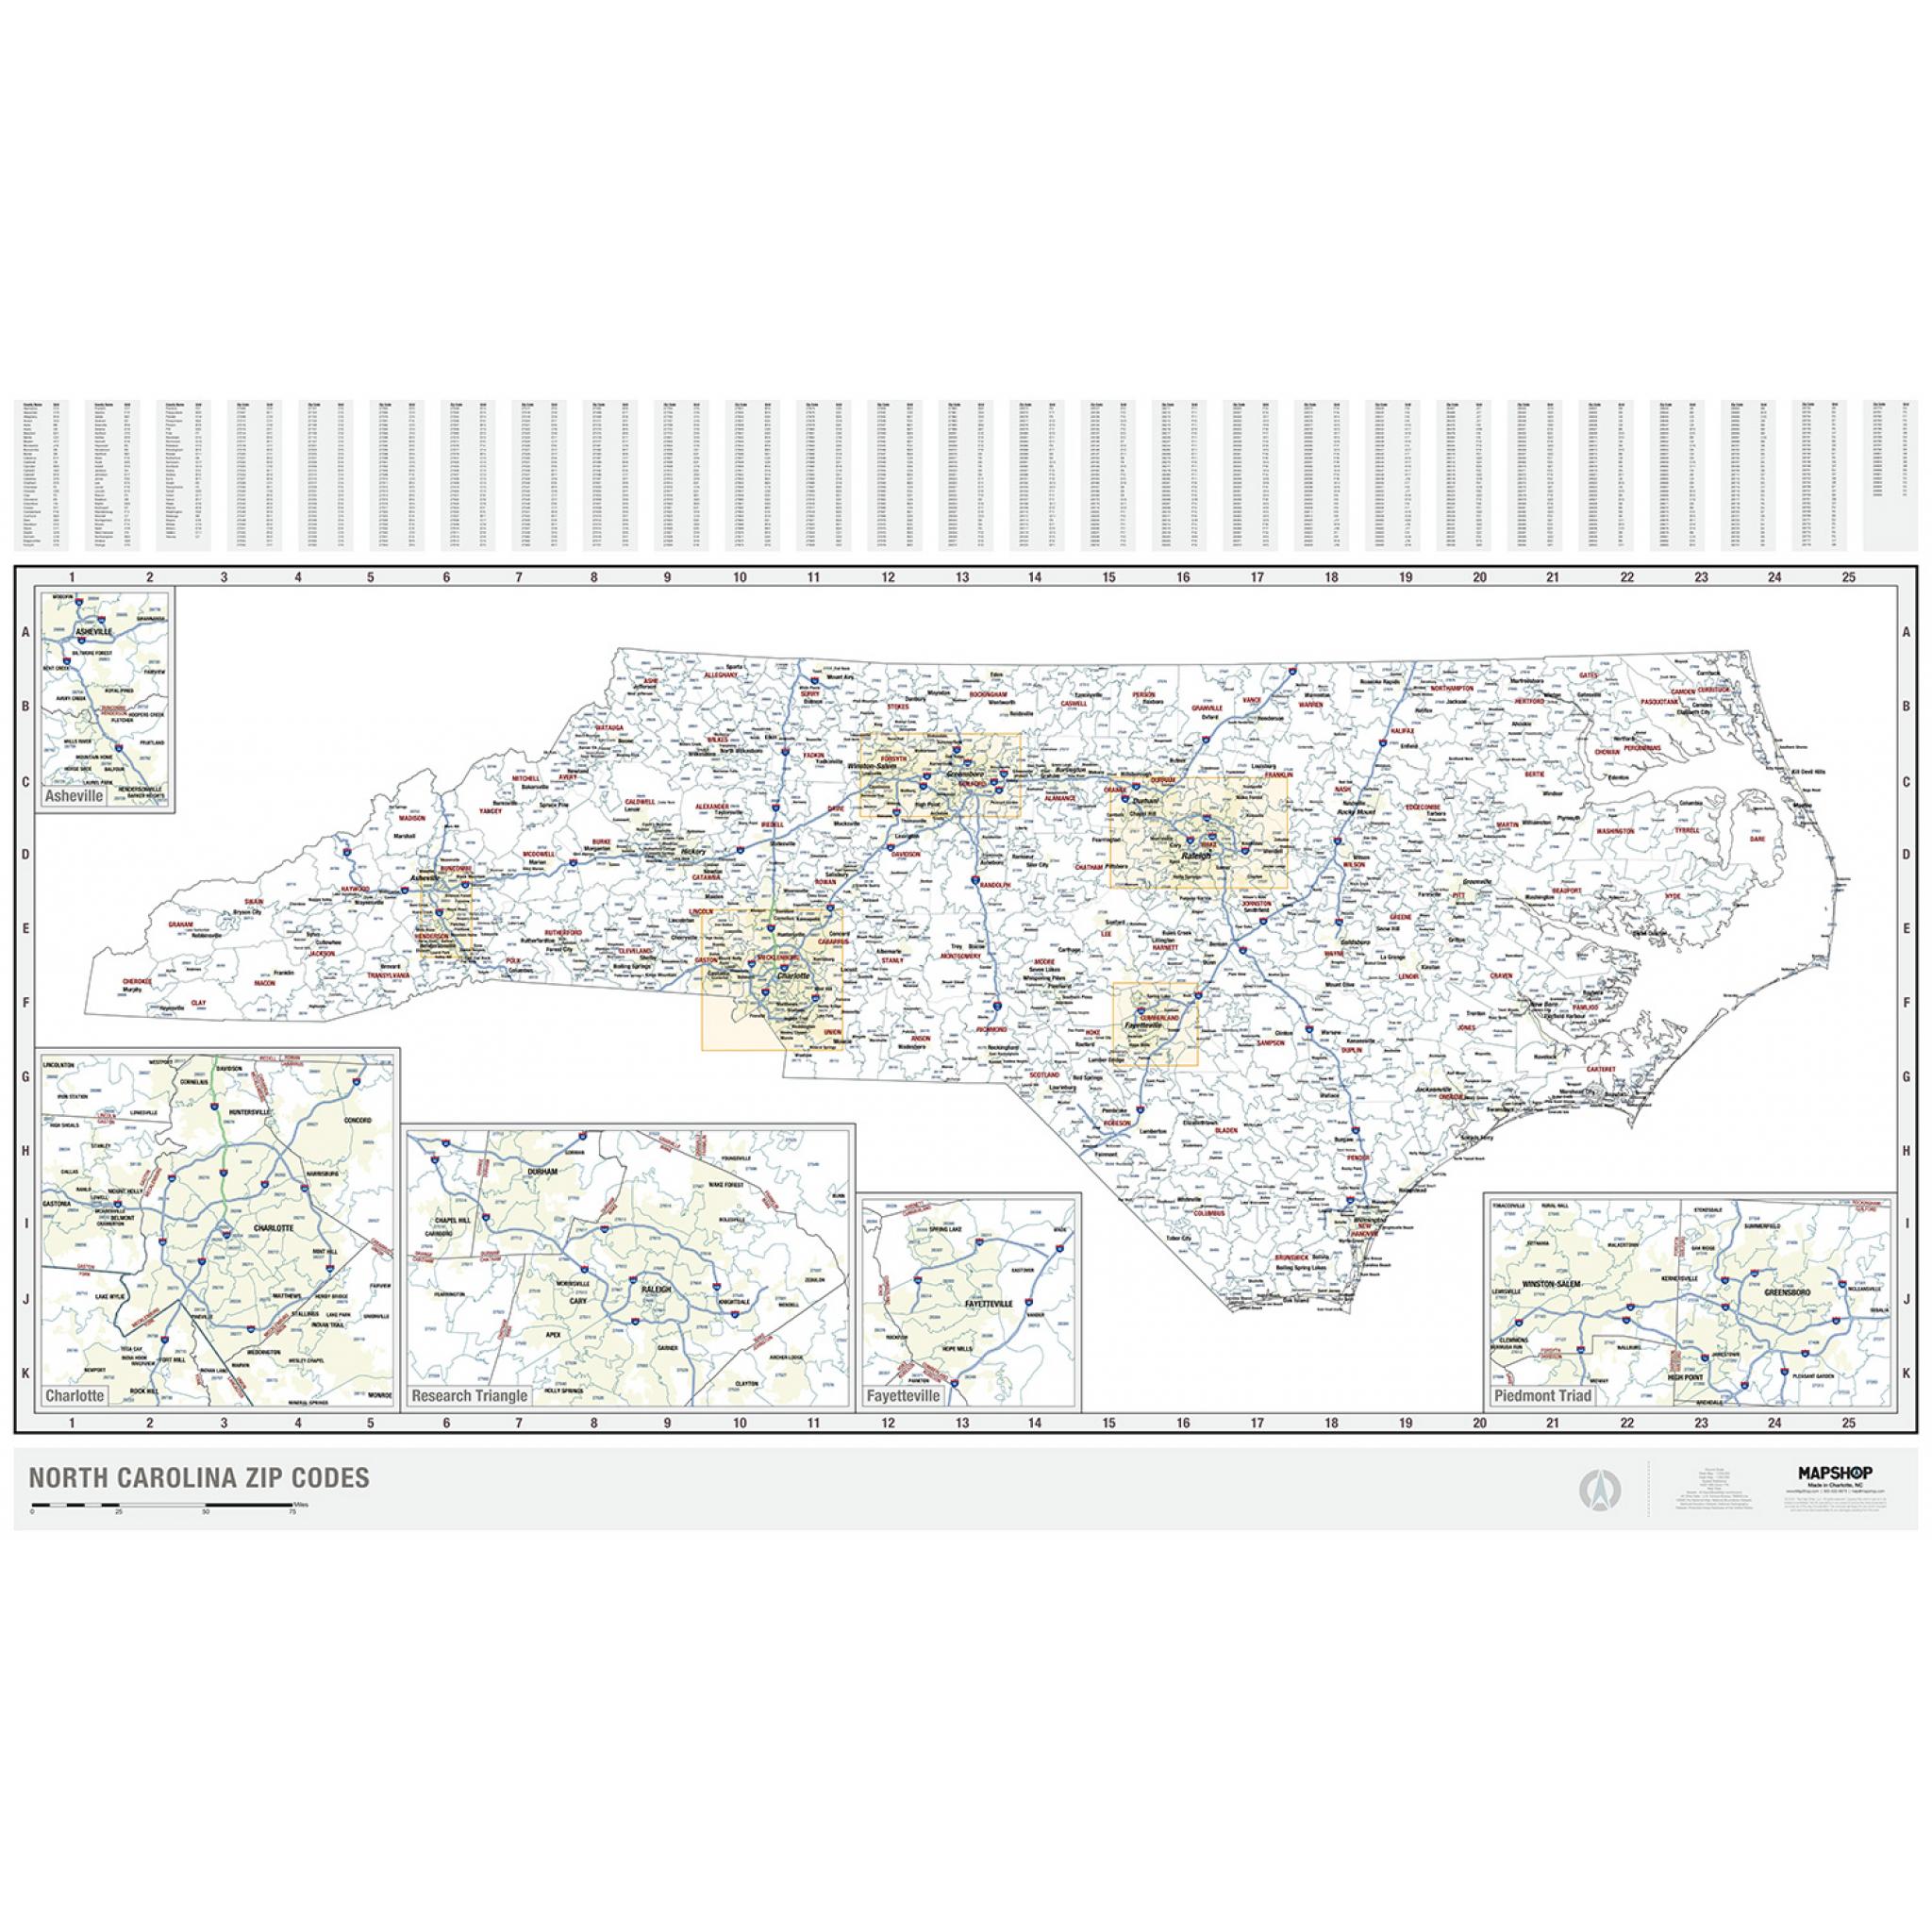 North Carolina Zip Code Wall Map By Mapshop The Map Shop 1194